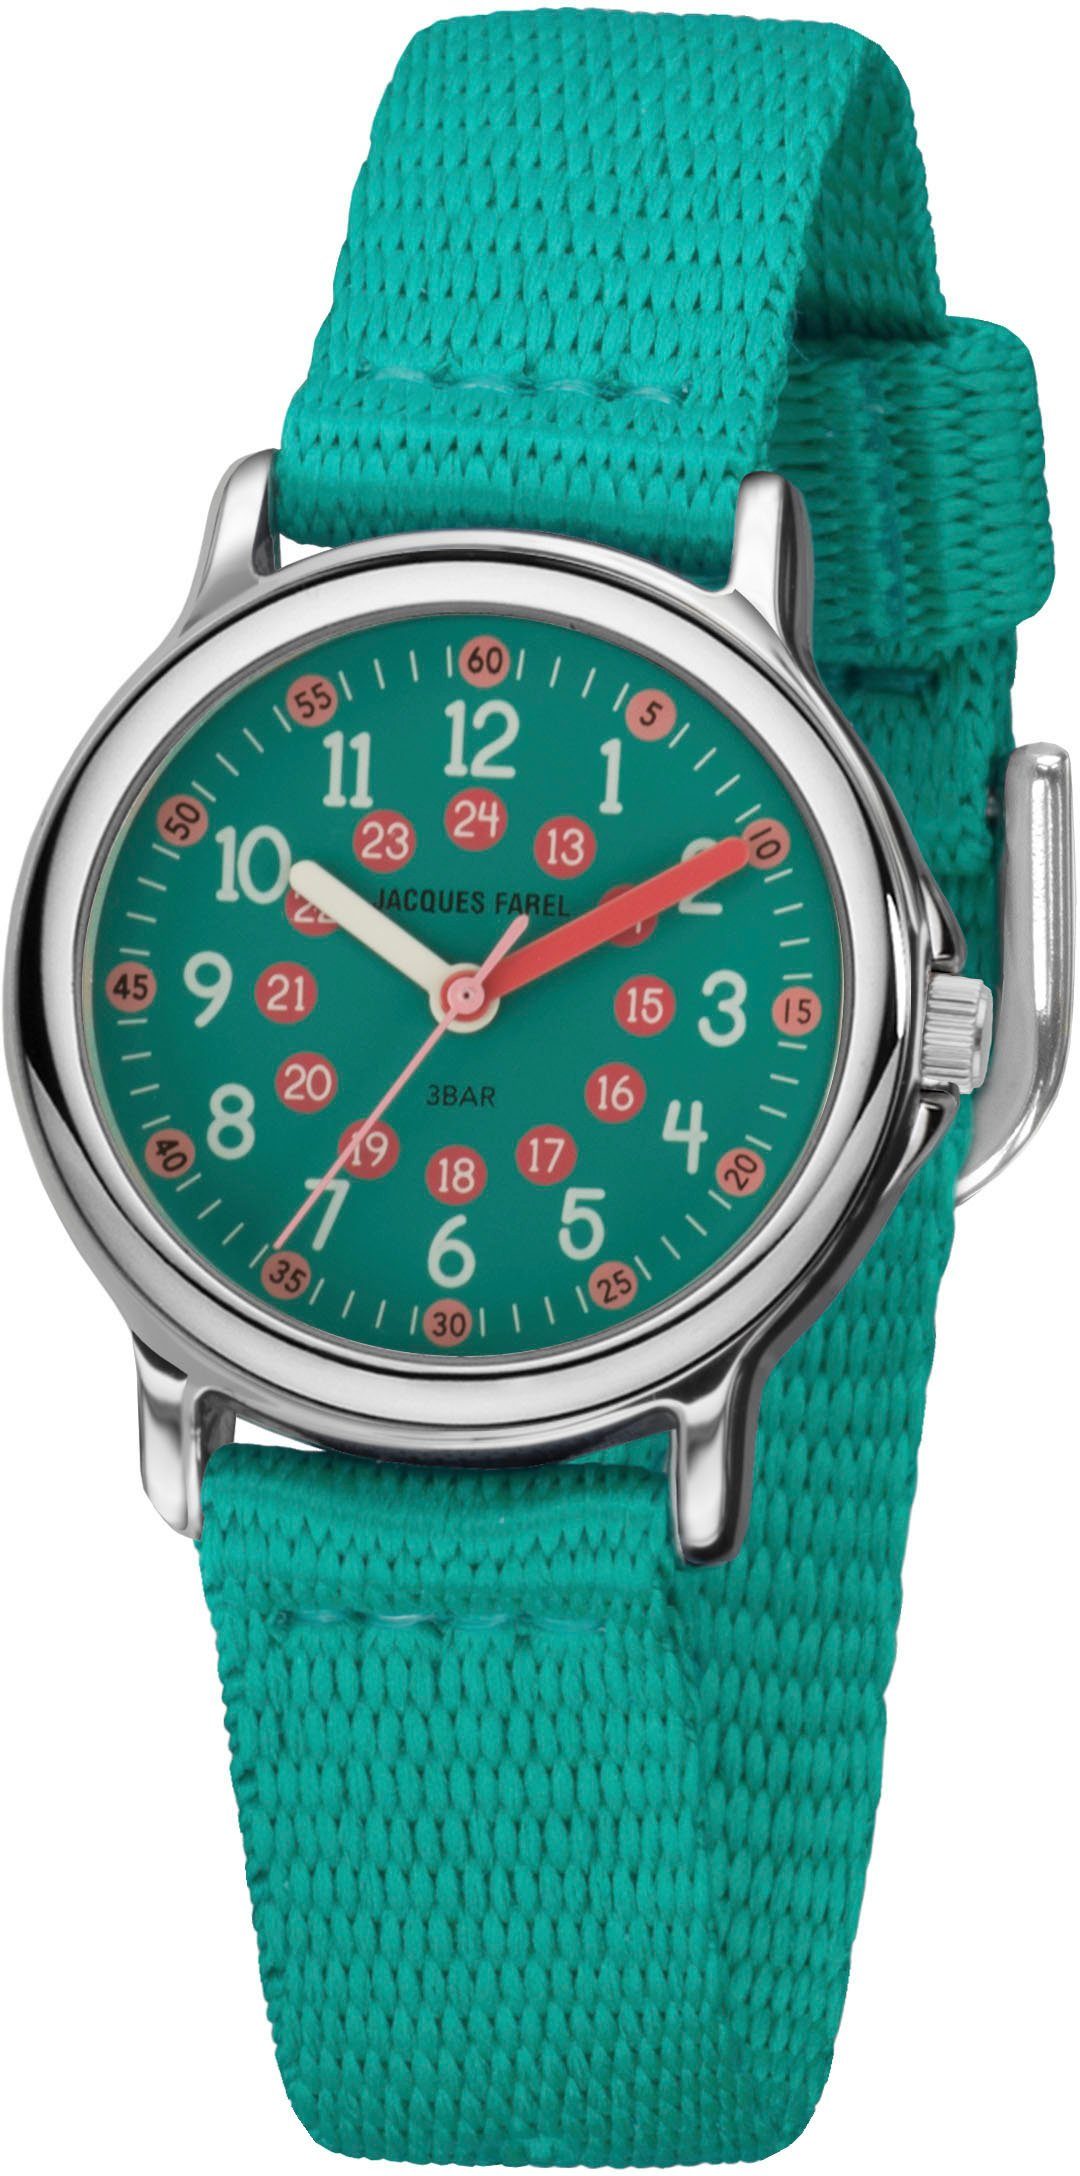 Jacques Farel Quarzuhr KCF 067, Armbanduhr, Kinderuhr, ideal auch als Geschenk